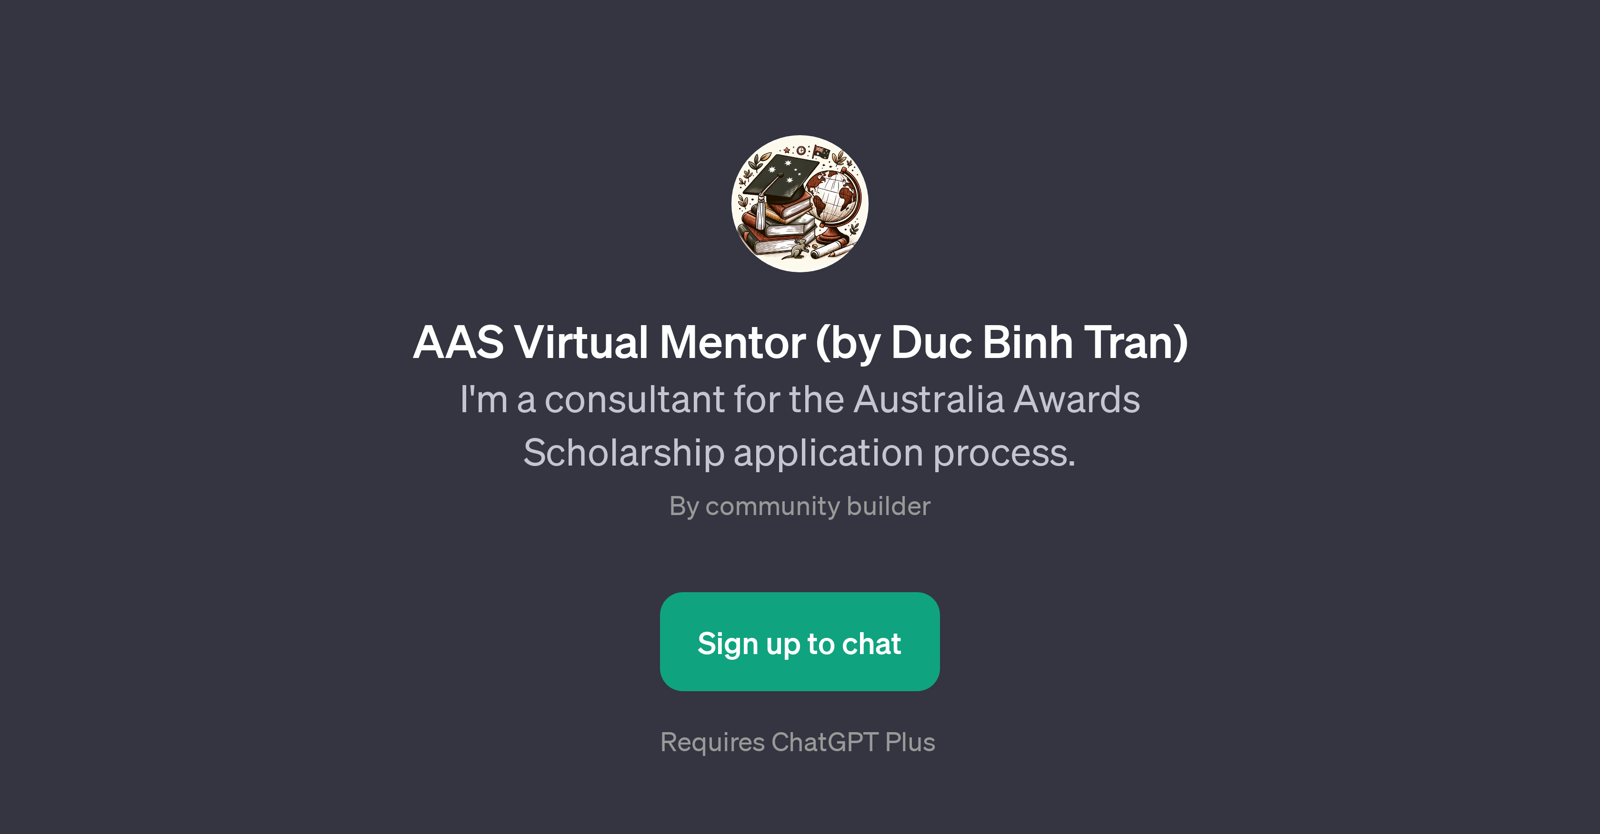 AAS Virtual Mentor (by Duc Binh Tran) website